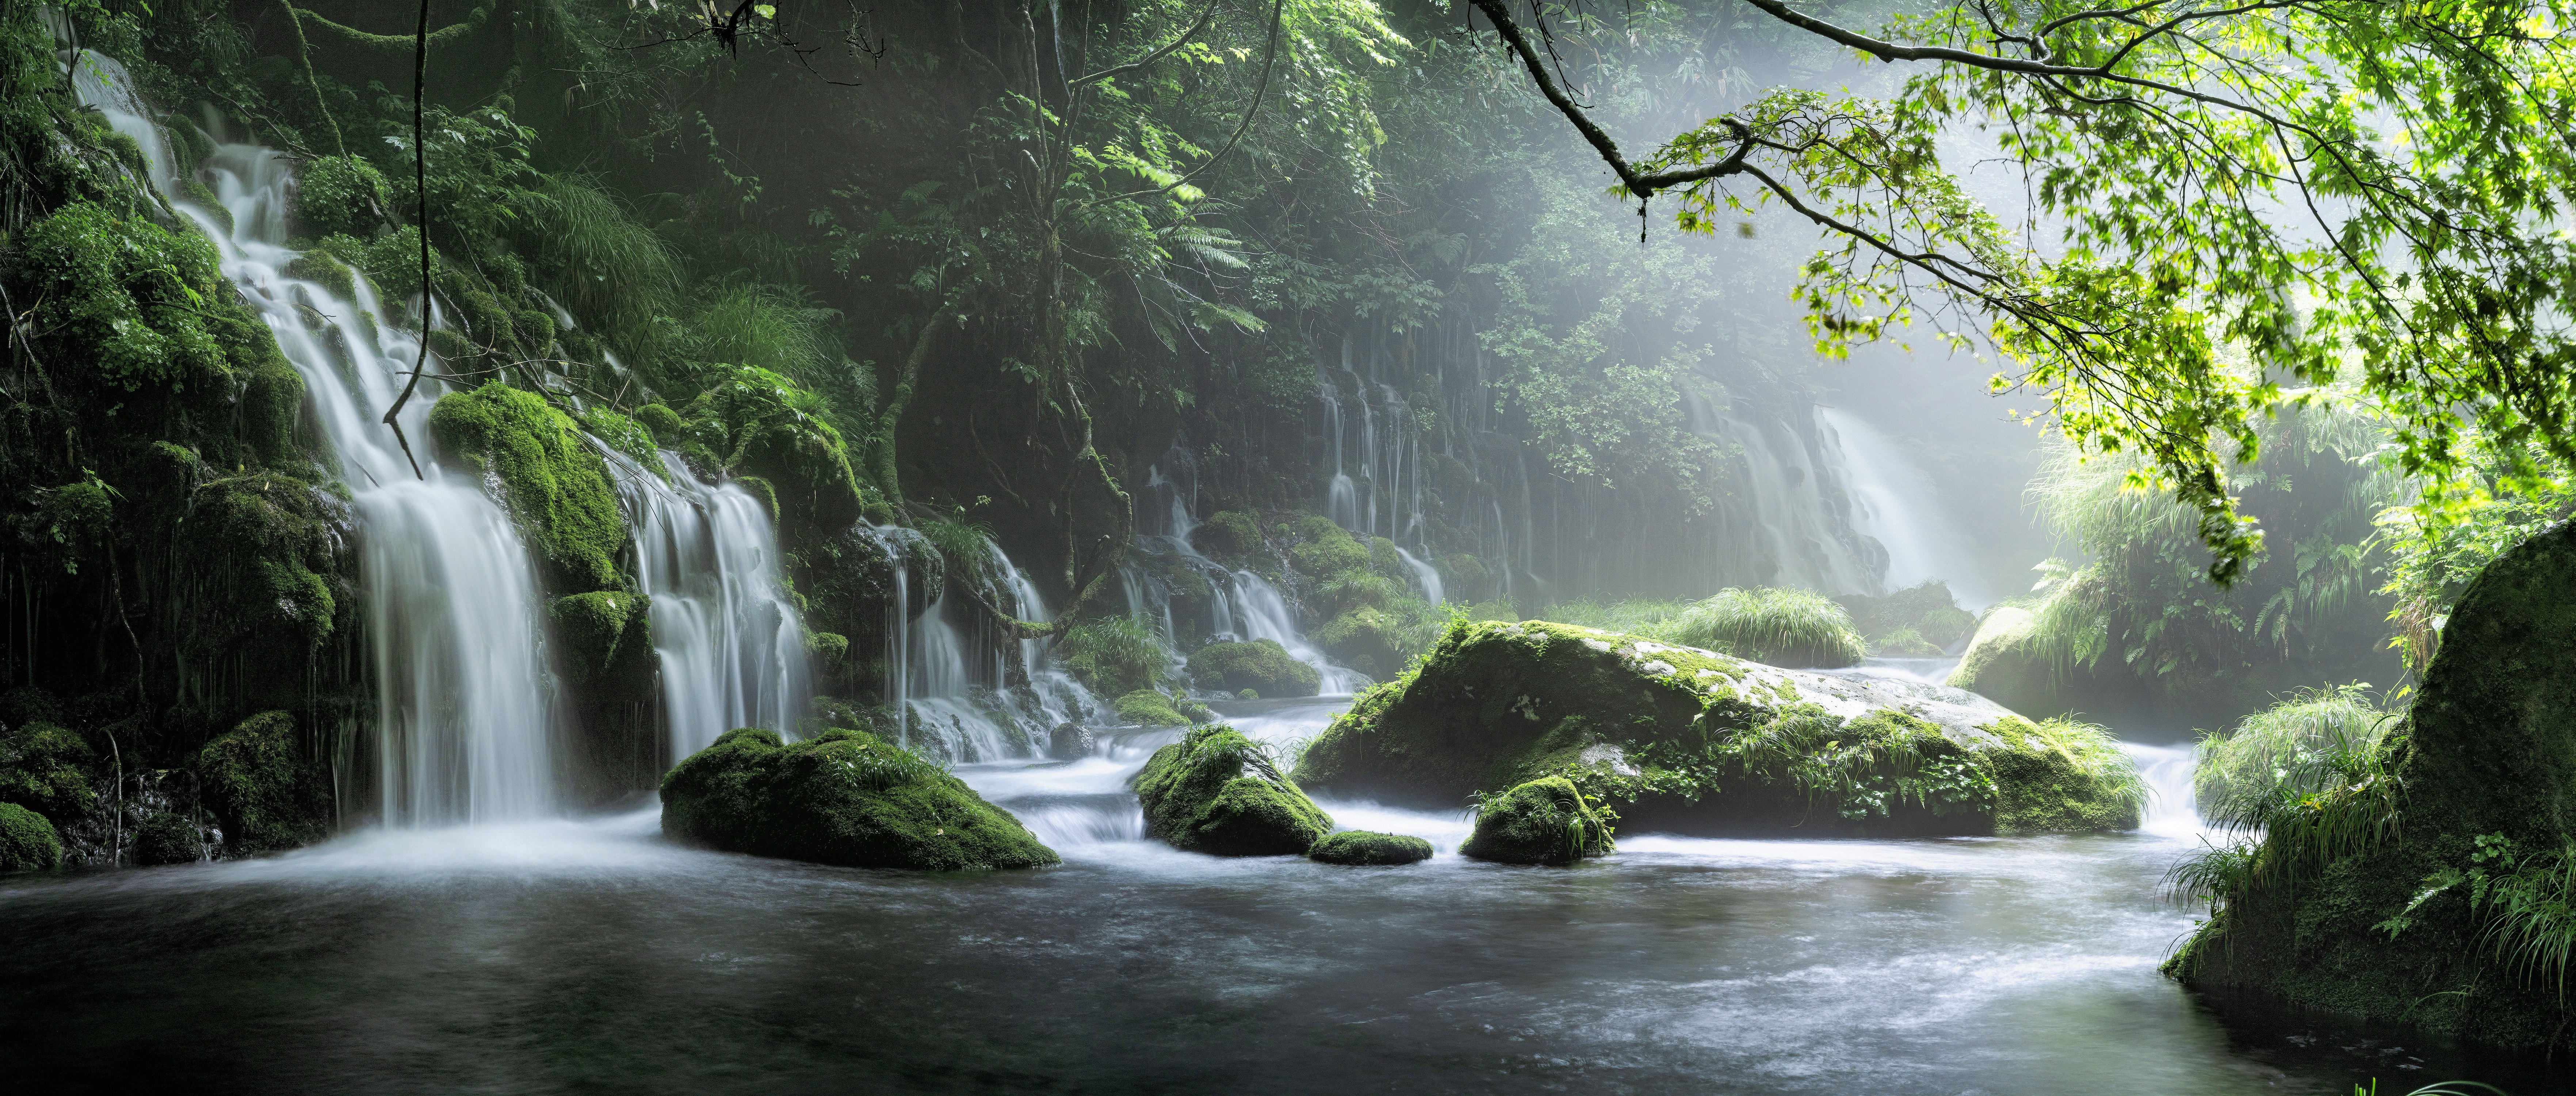 Descarga gratis la imagen Naturaleza, Cascadas, Cascada, Tierra/naturaleza, Verdor en el escritorio de tu PC